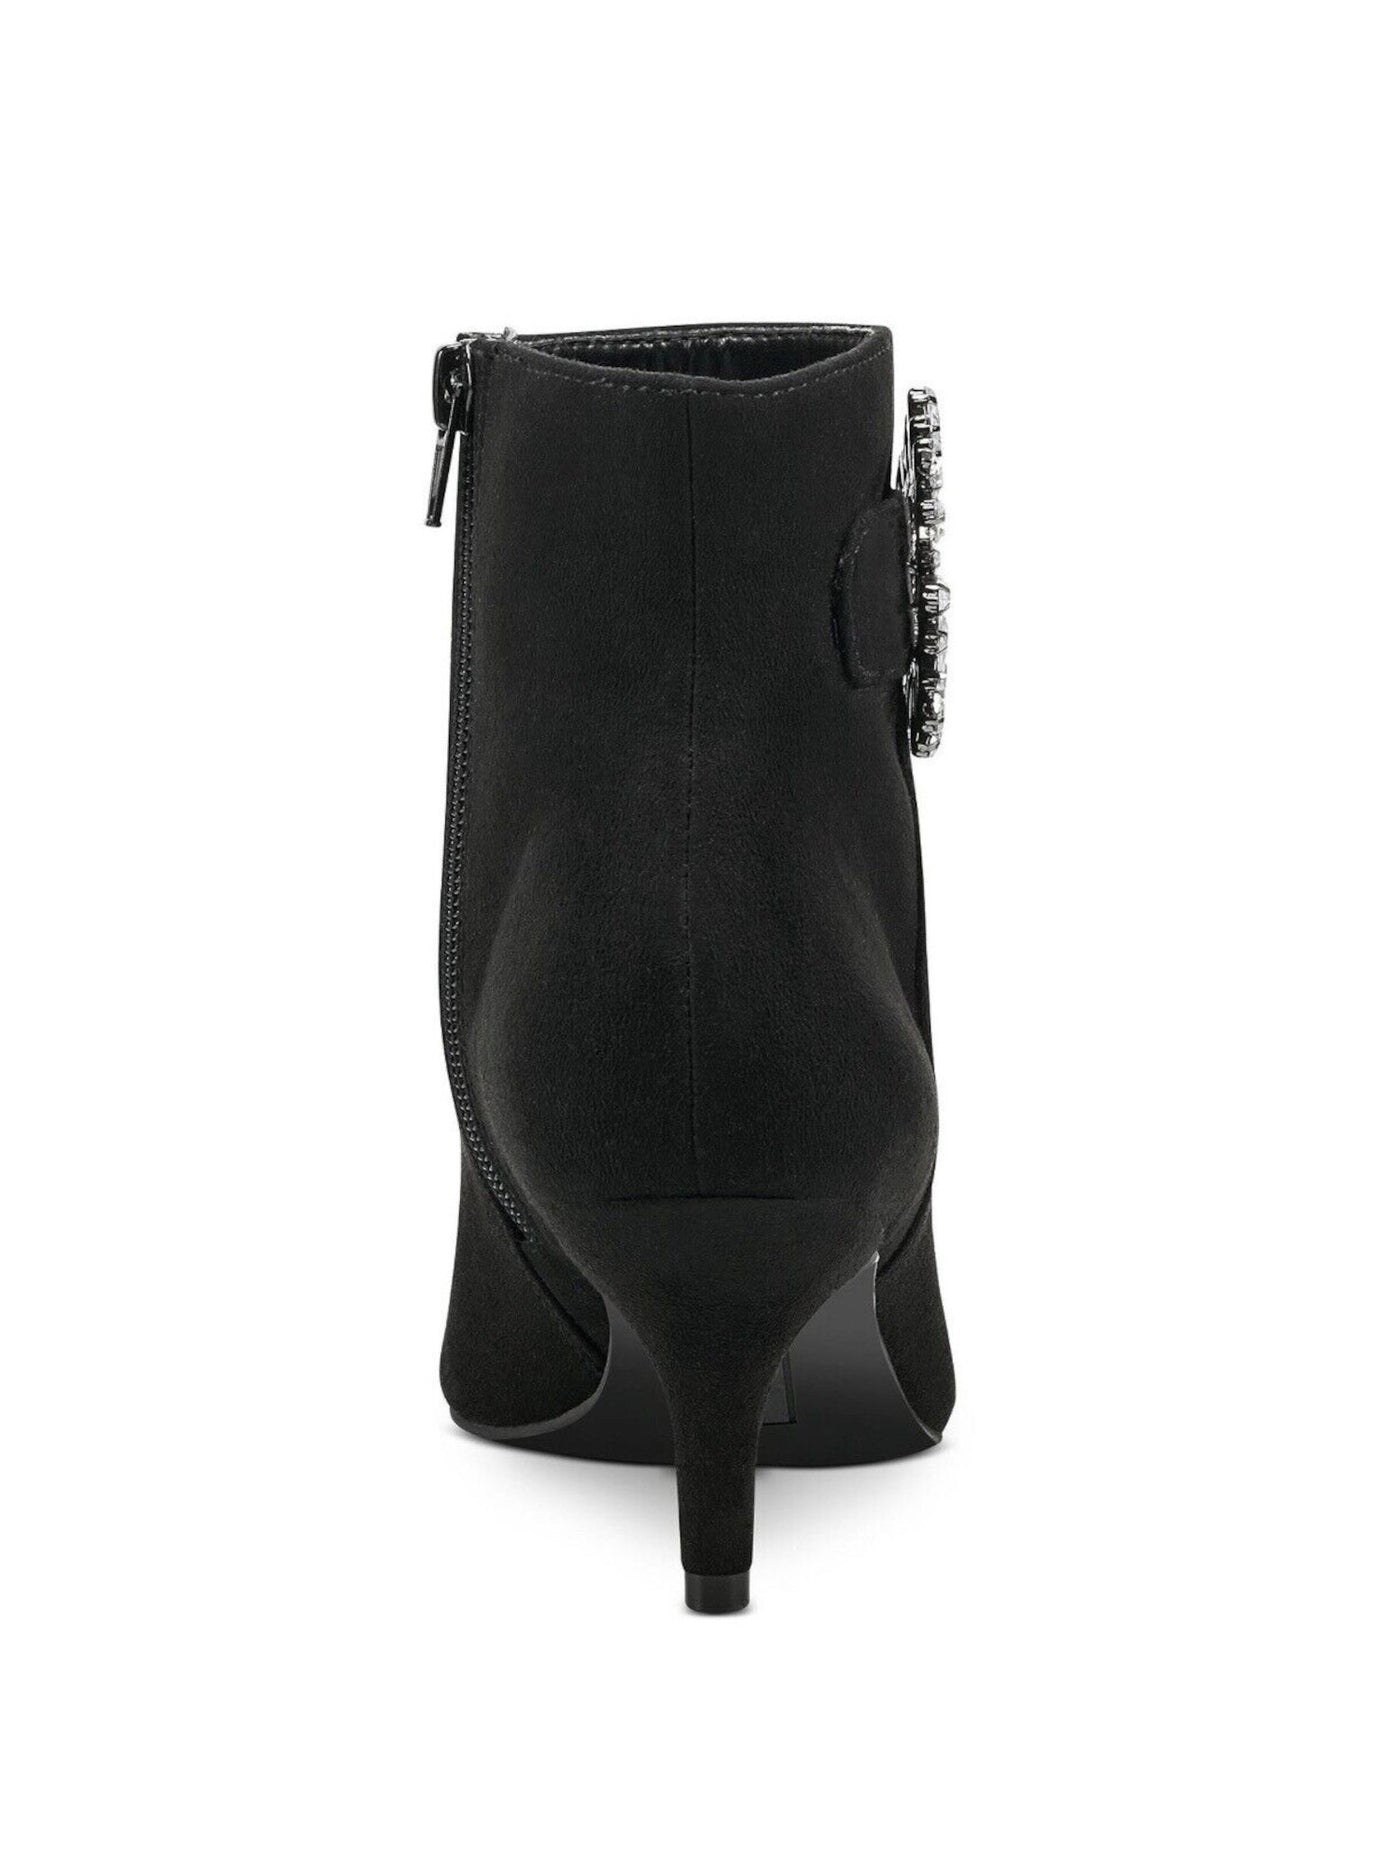 CHARTER CLUB Womens Black Embellished Comfort Crafta Pointed Toe Kitten Heel Zip-Up Booties 7 M